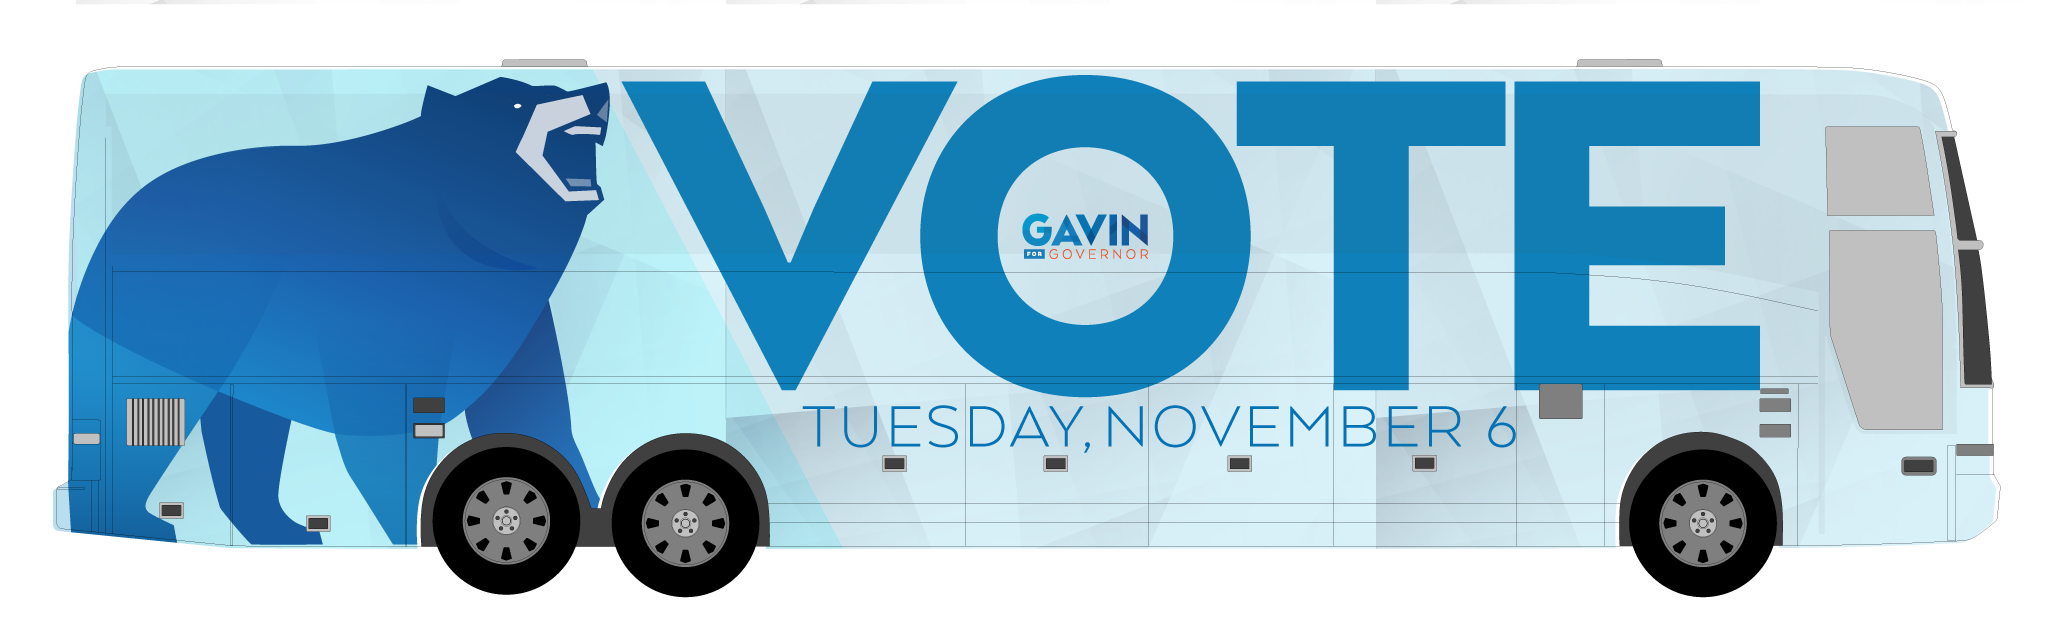 Gavin Newsom Bus Wrap Render VOTE